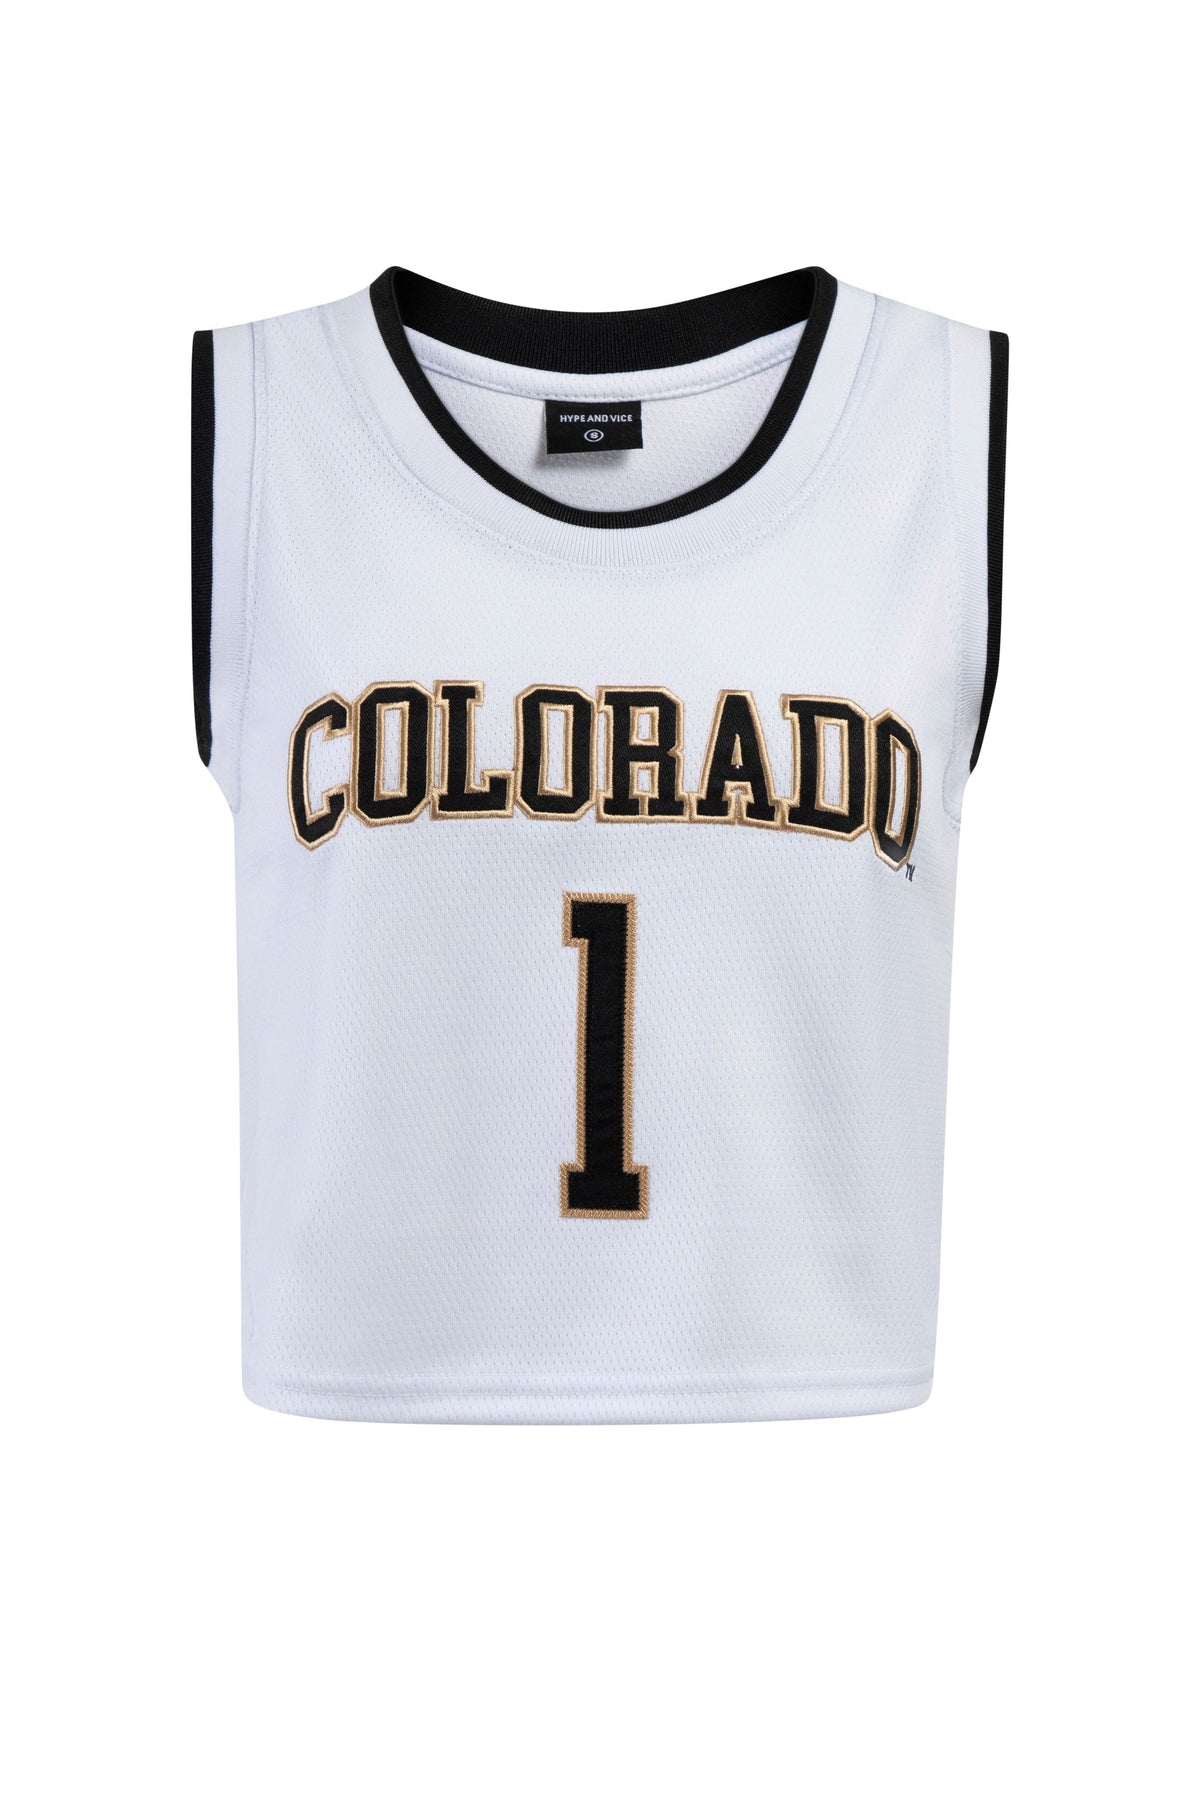 University of Colorado Basketball Top